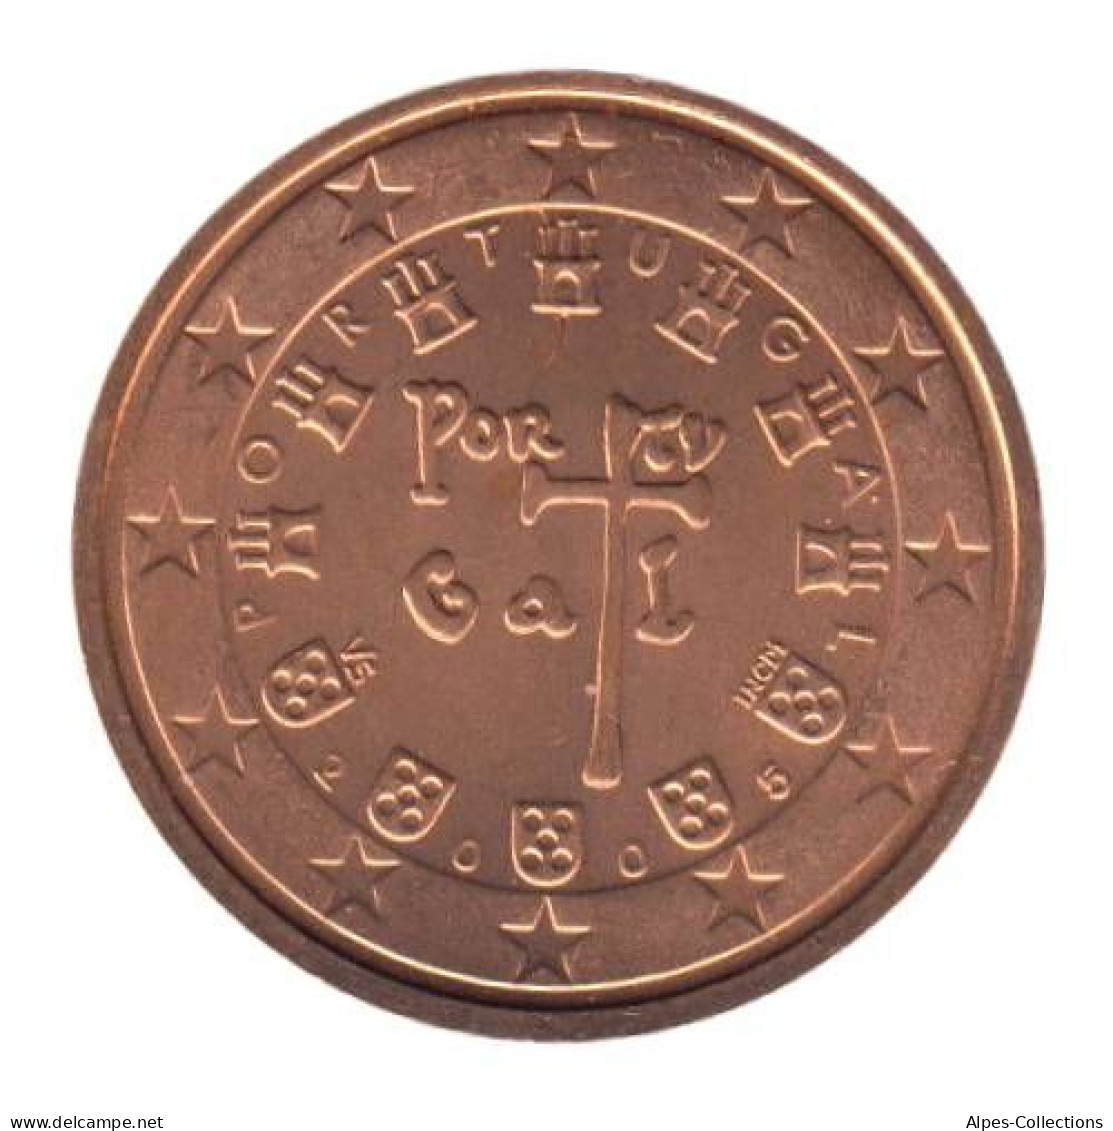 PO00205.1 - PORTUGAL - 2 Cents - 2005 - Portugal